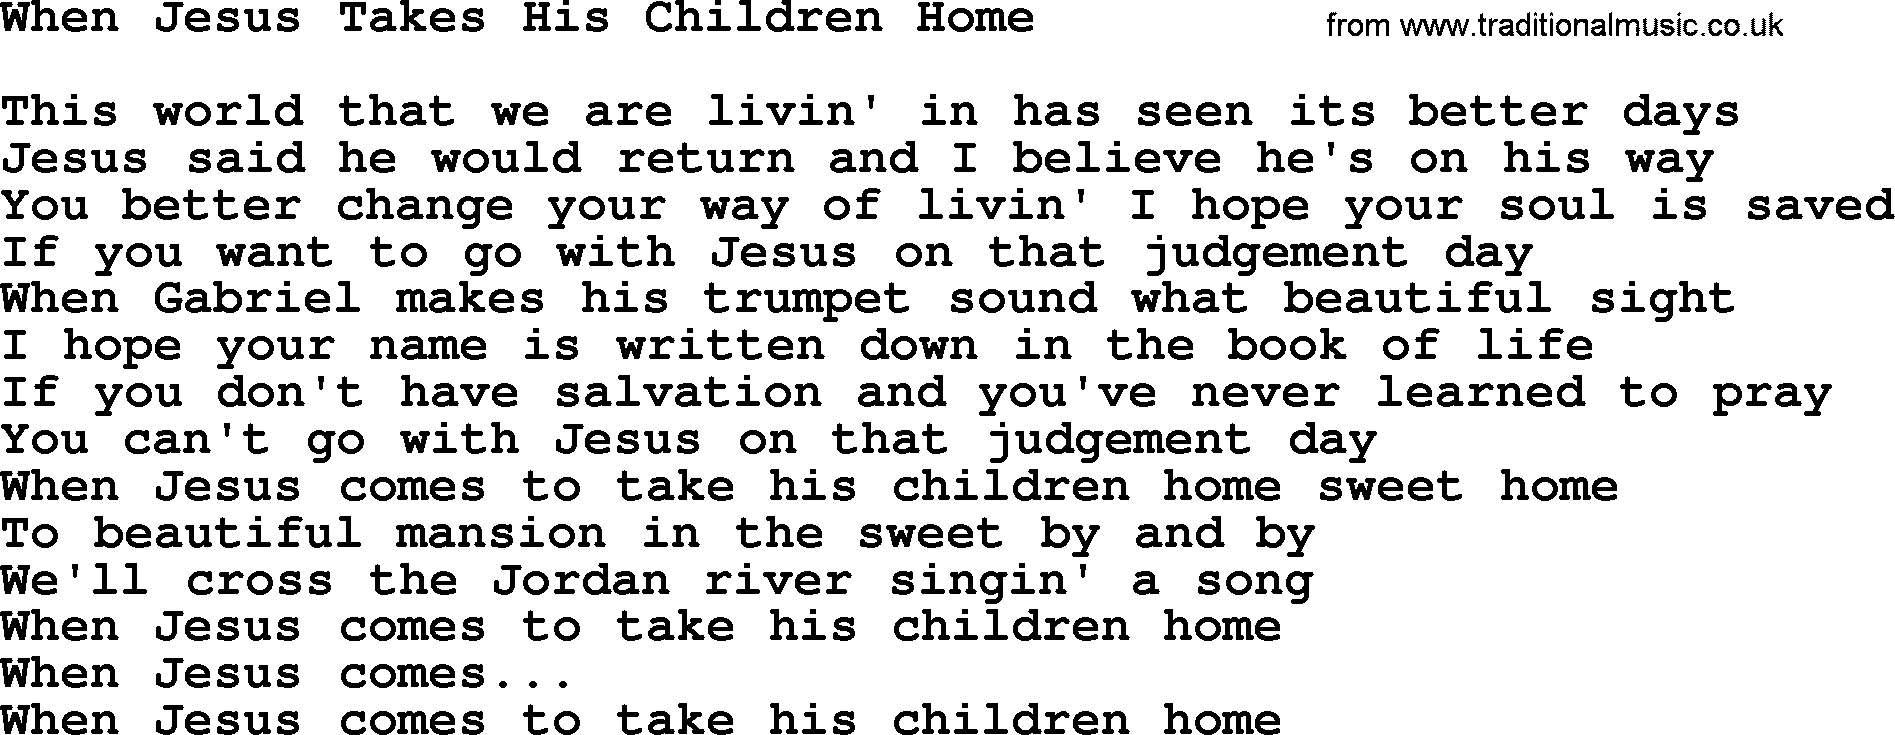 George Jones song: When Jesus Takes His Children Home, lyrics